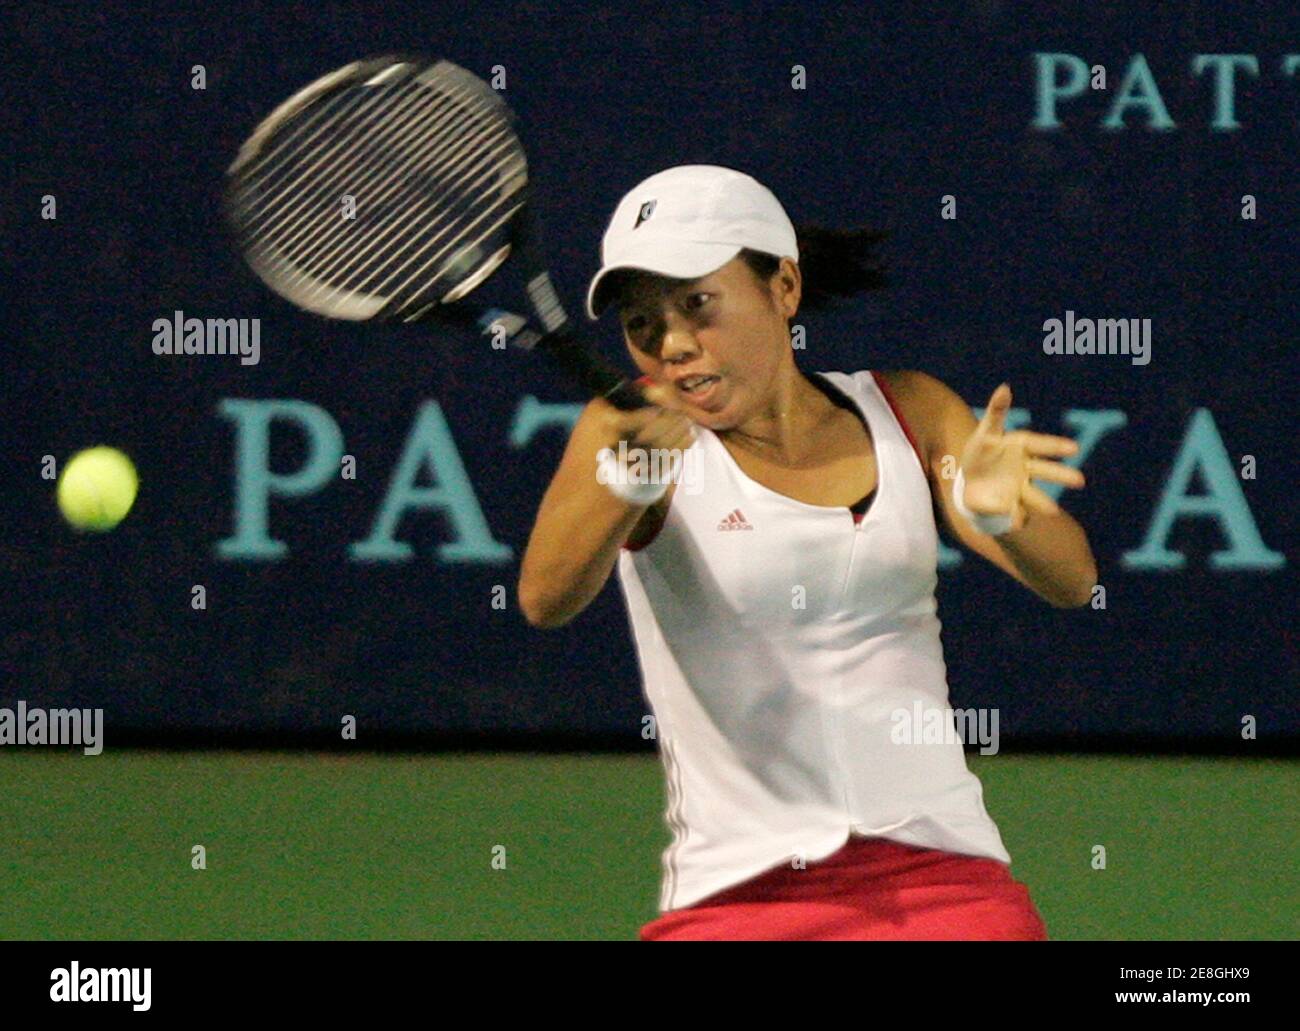 Vania King of the U.S. plays a shot to Croatia's Jelena Kostanic Tosic at the Pattaya Women's Open tennis tournament in Pattaya, Thailand February 6, 2007. REUTERS/Chaiwat Subprasom (THAILAND) Stock Photo